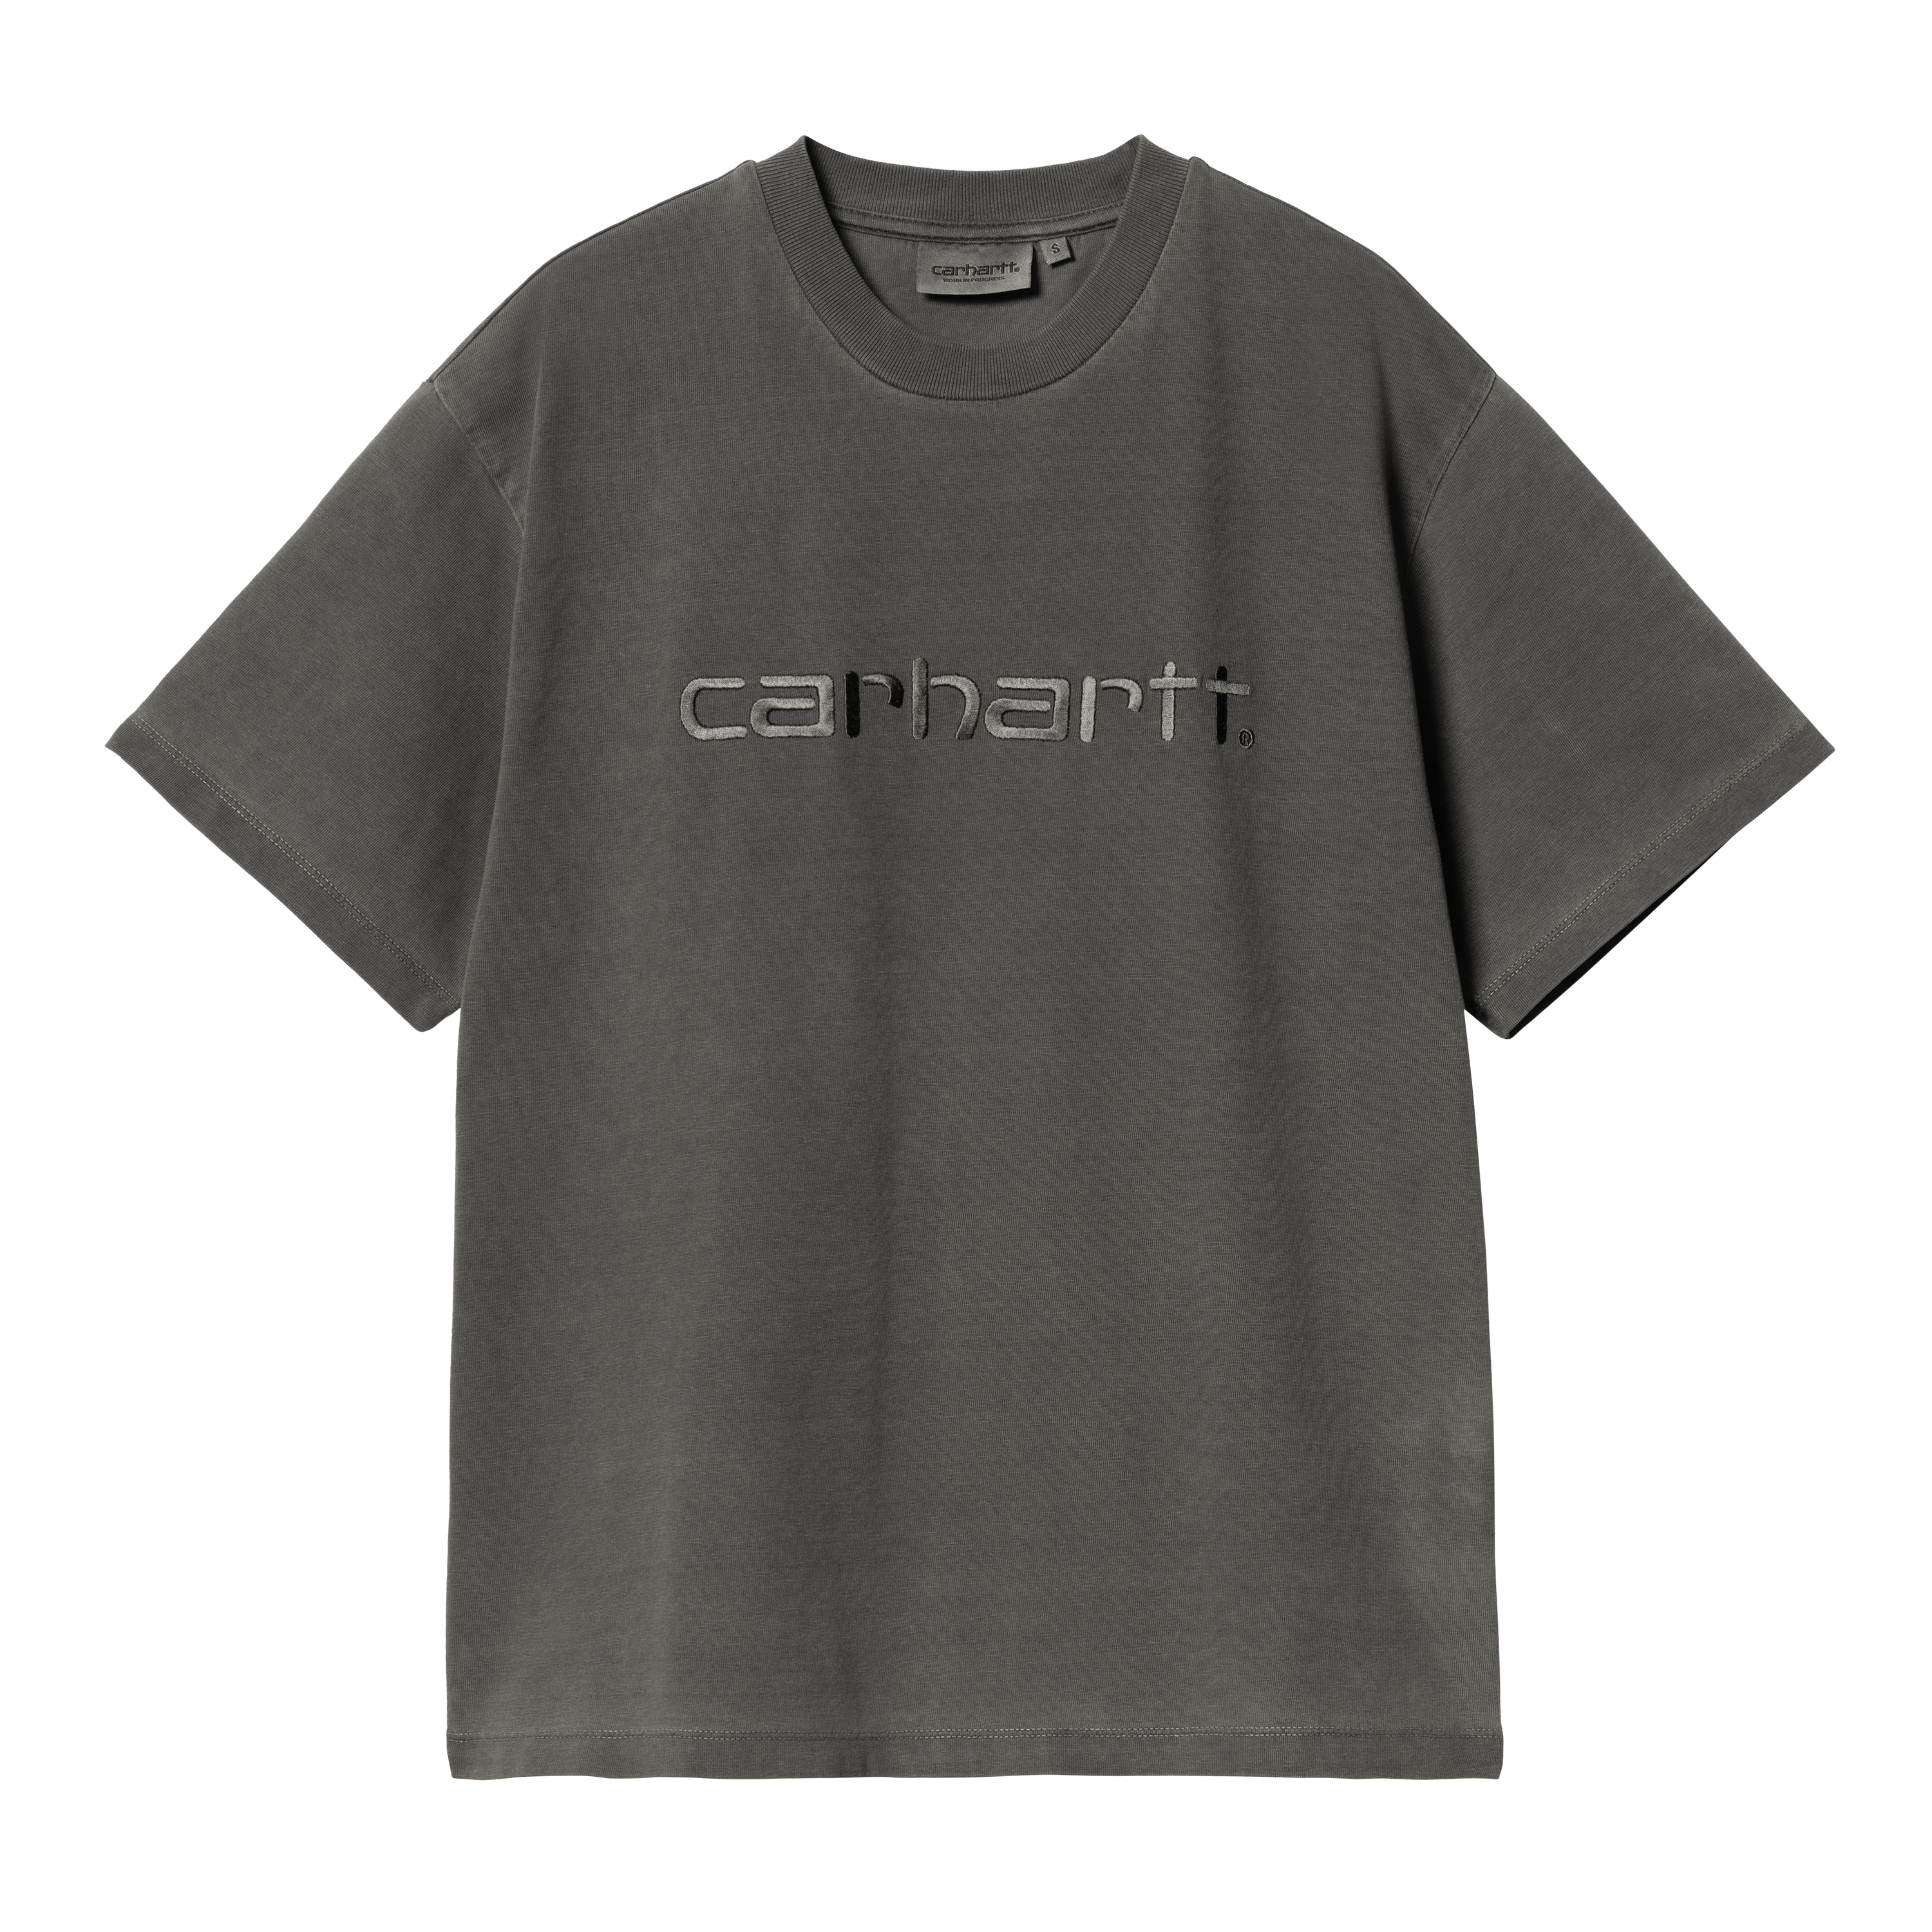 Carhartt WIP Women’s Short Sleeve Duster T-Shirt in Nero